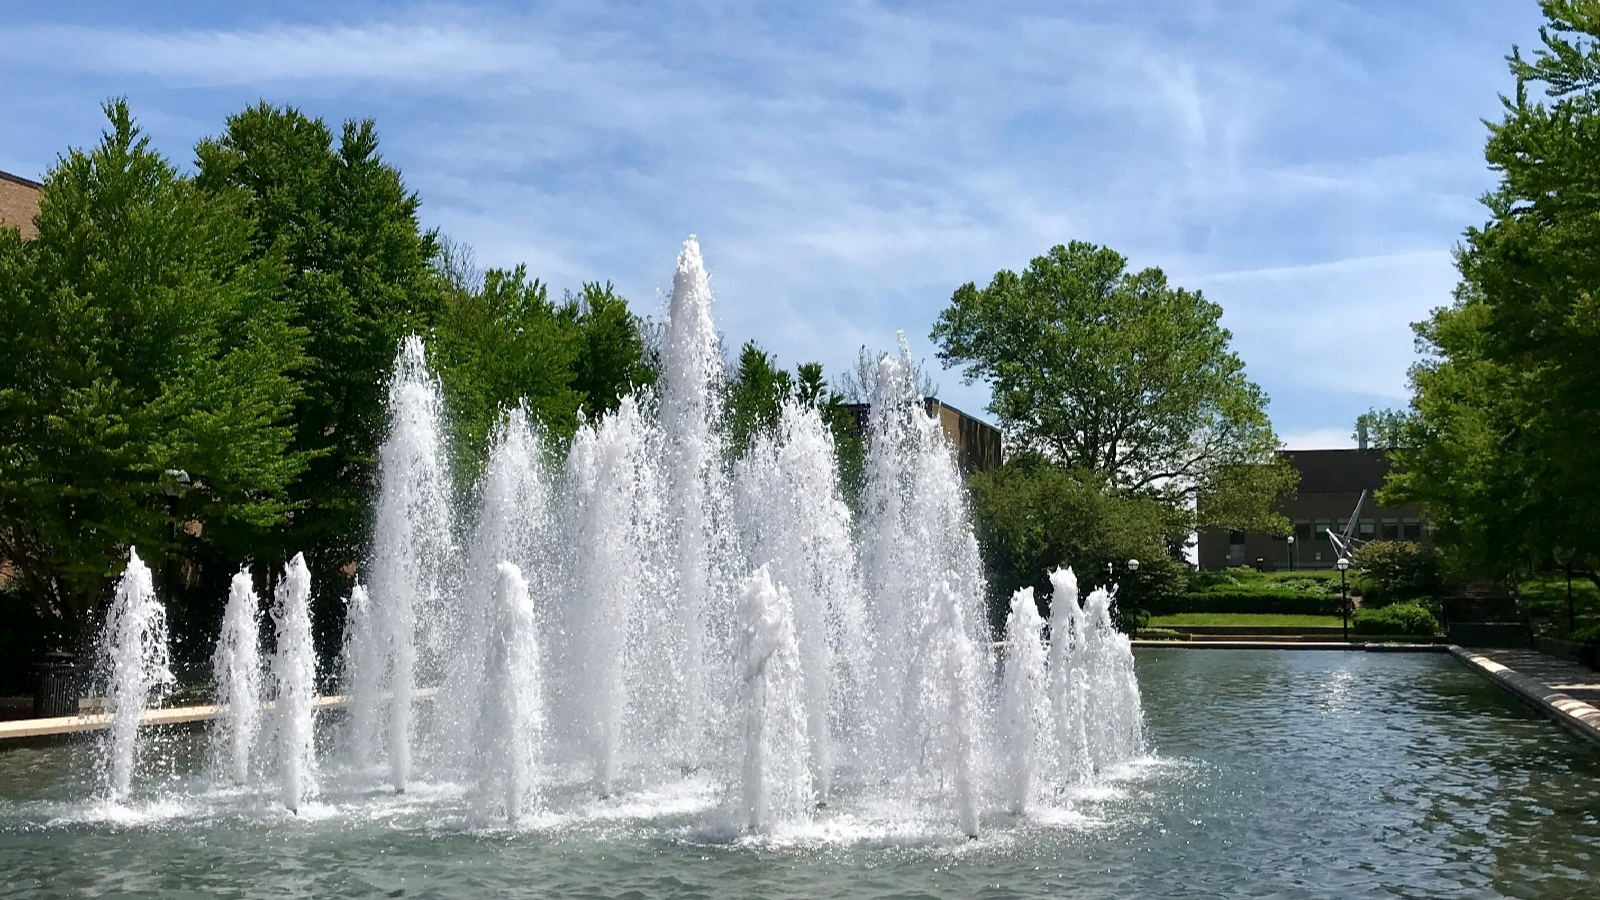 University of Michigan Fountain